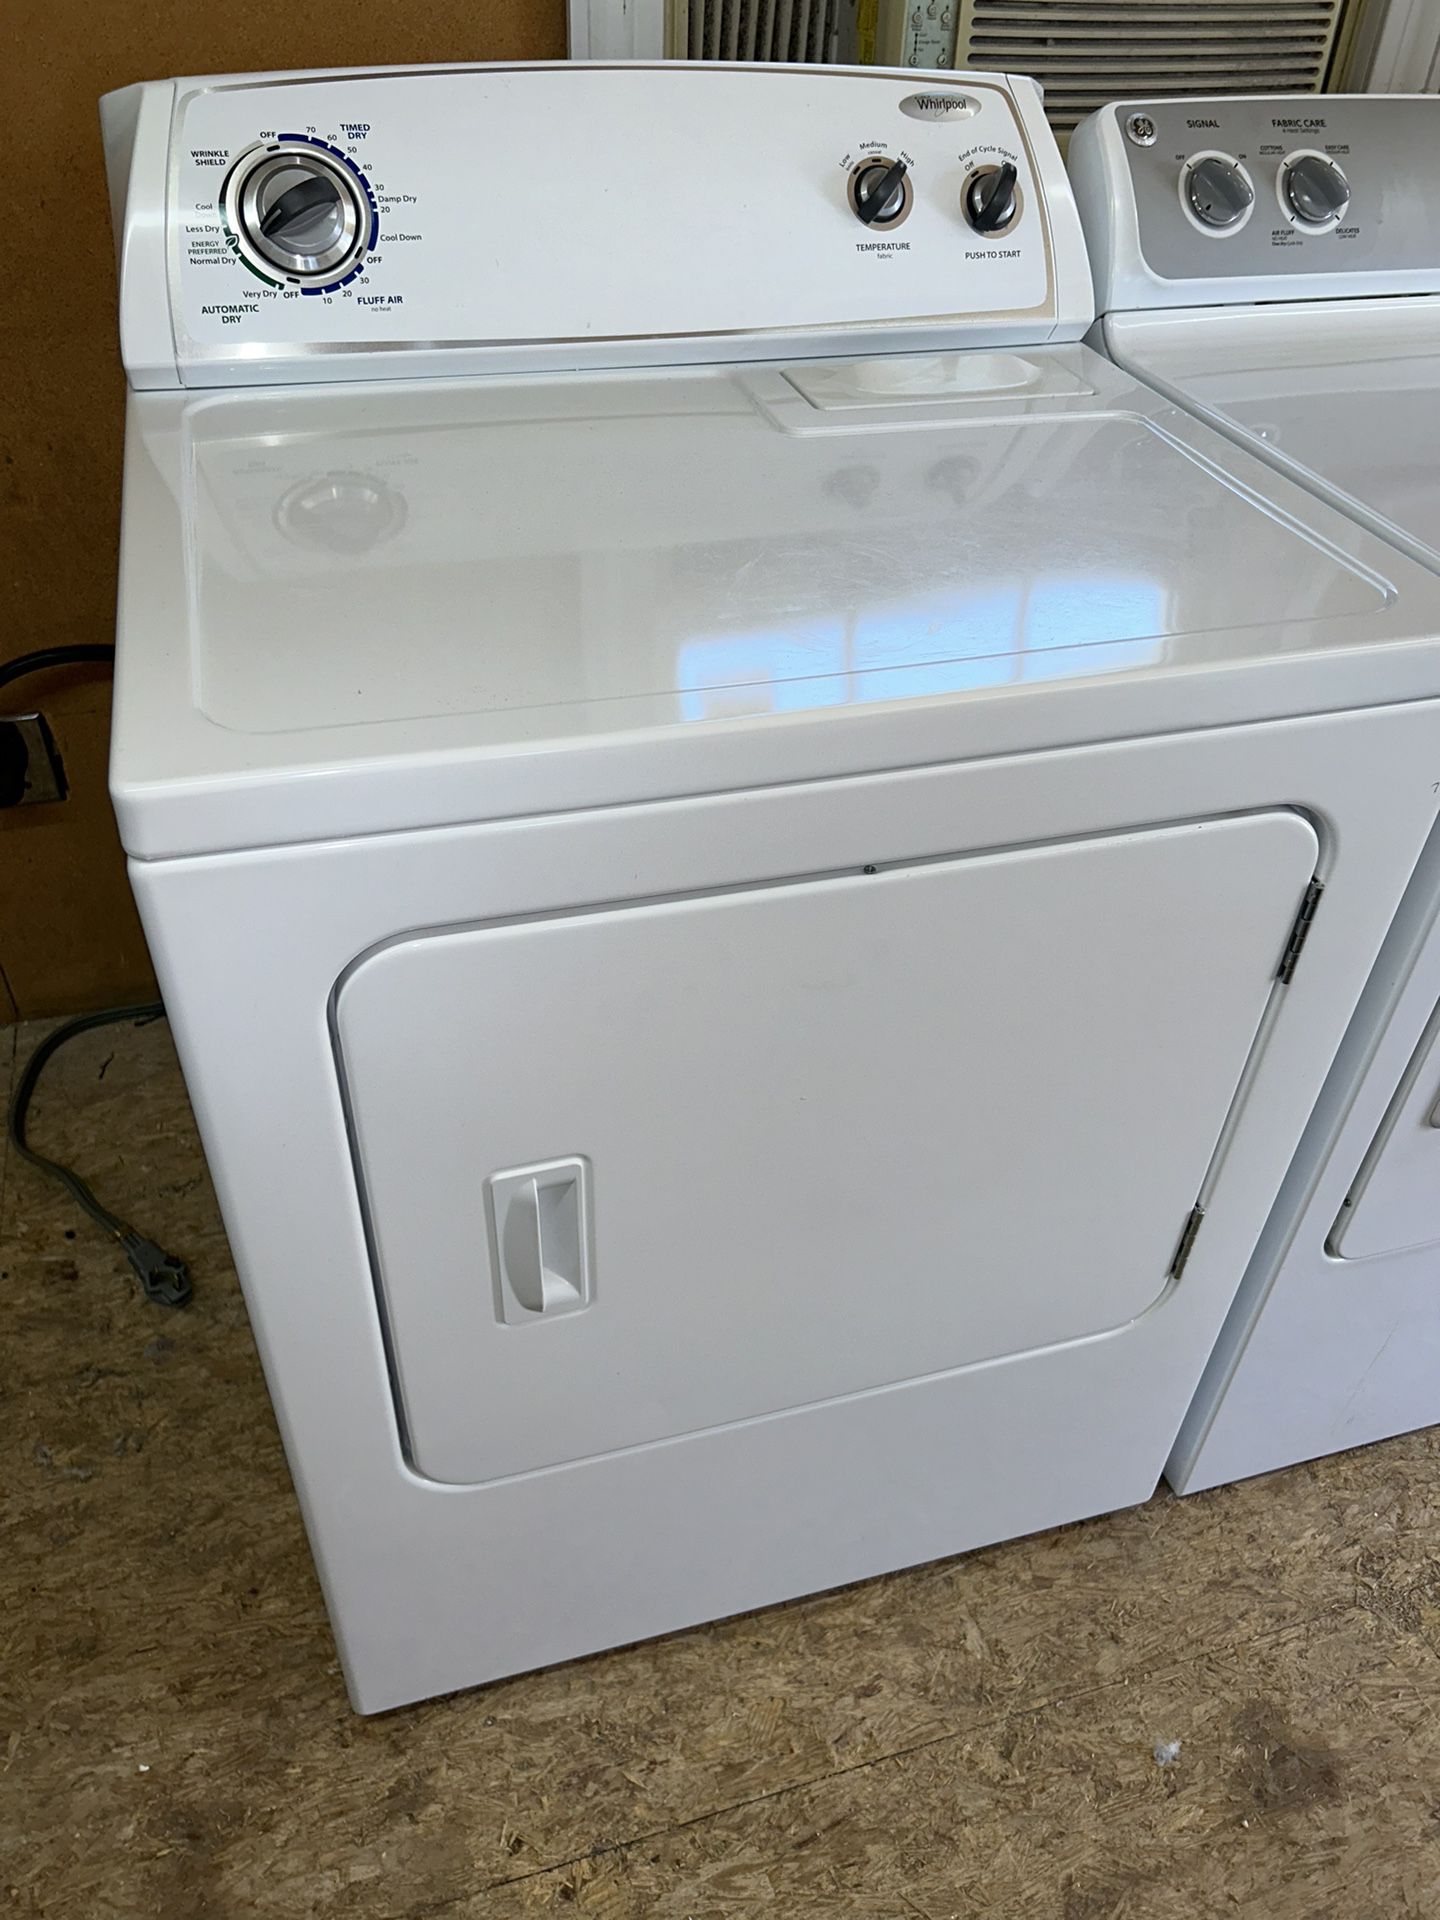 Whirlpool Super Capacity Dryer